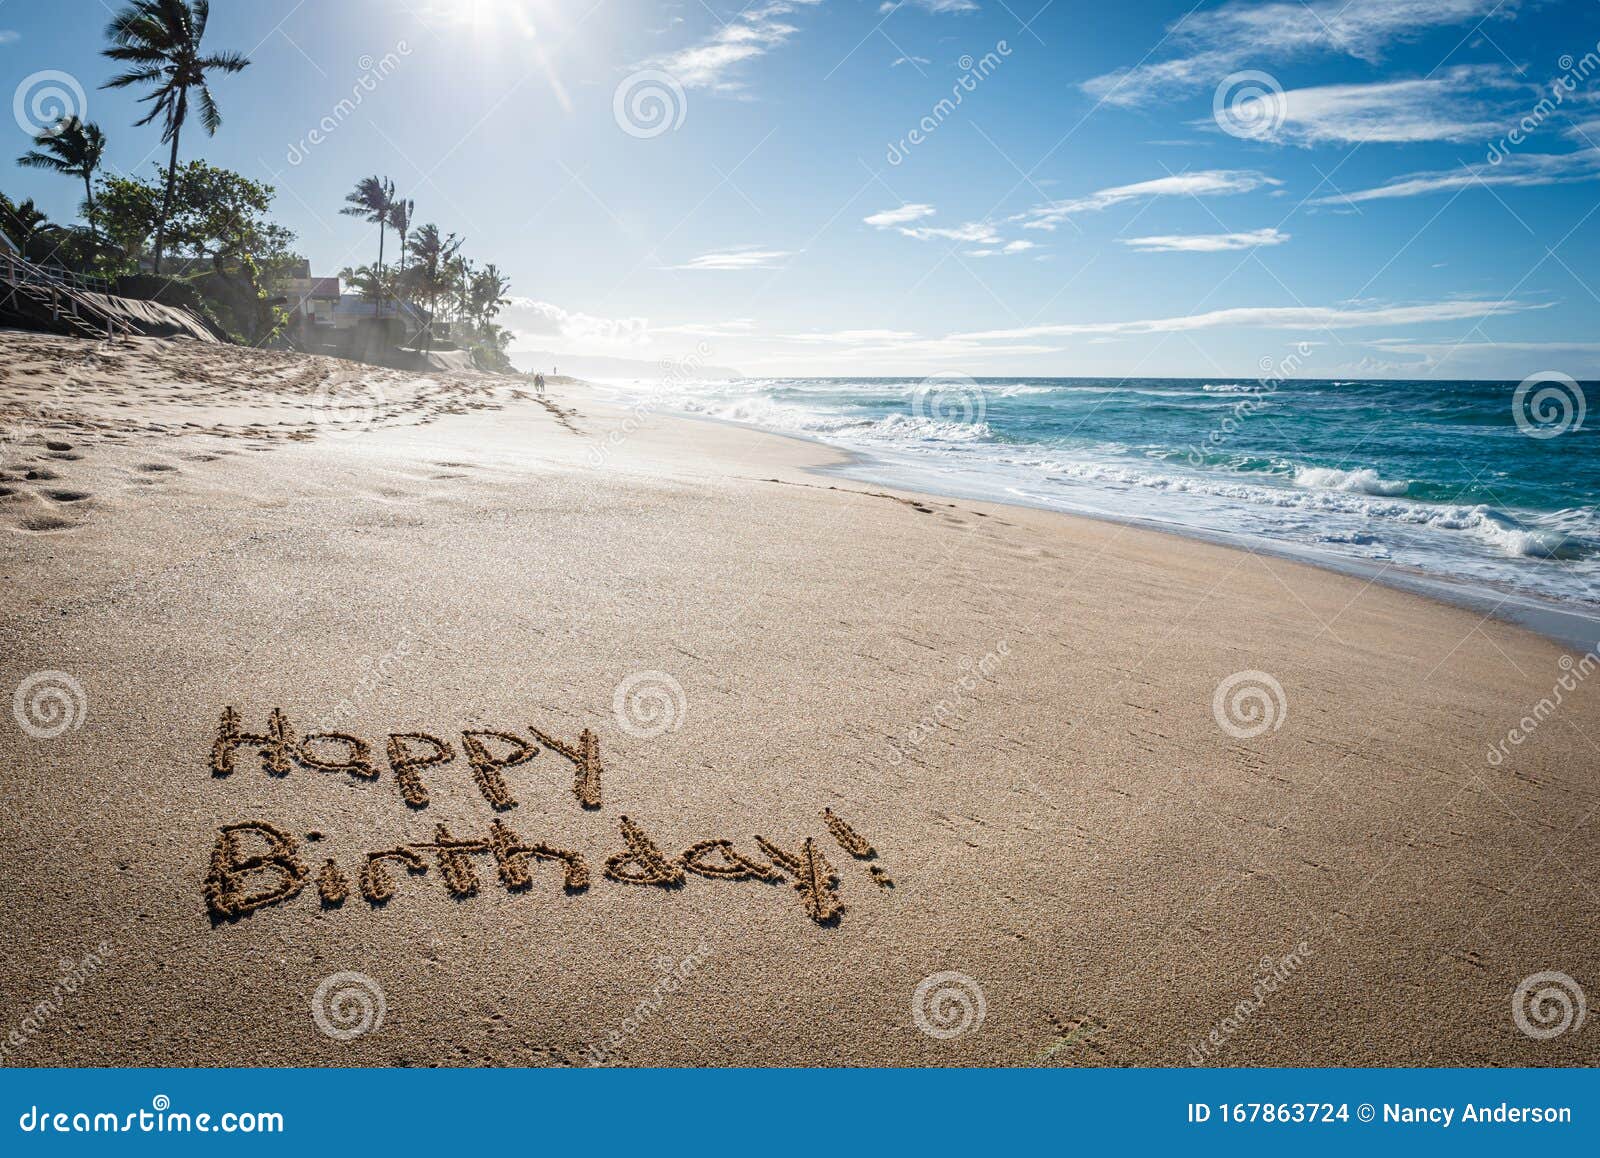 happy birthday written sand sunset beach hawaii palm trees ocean background happy birthday 167863724